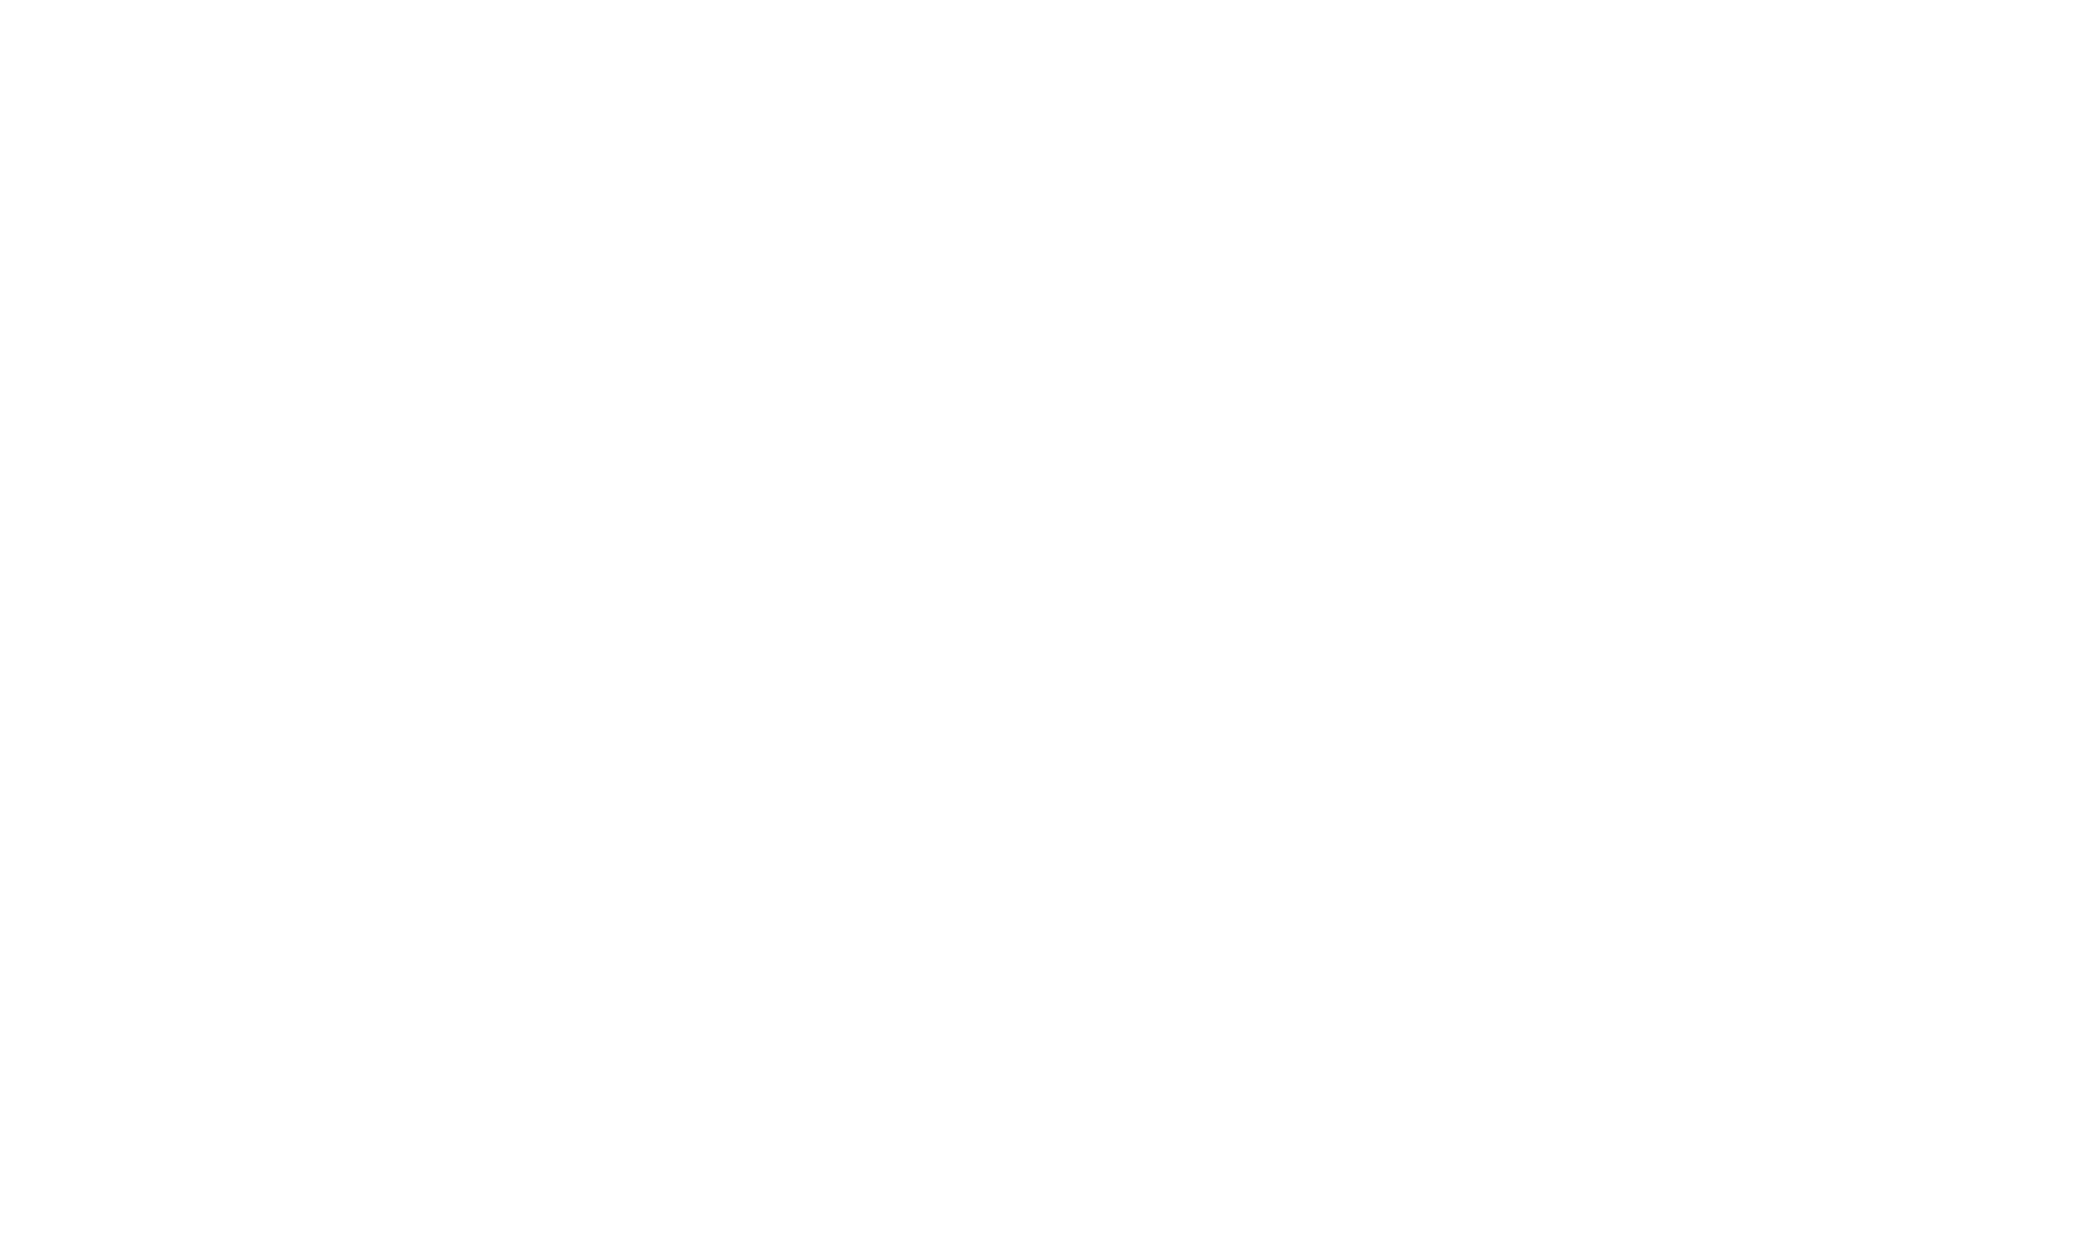 Christopher La Rosa